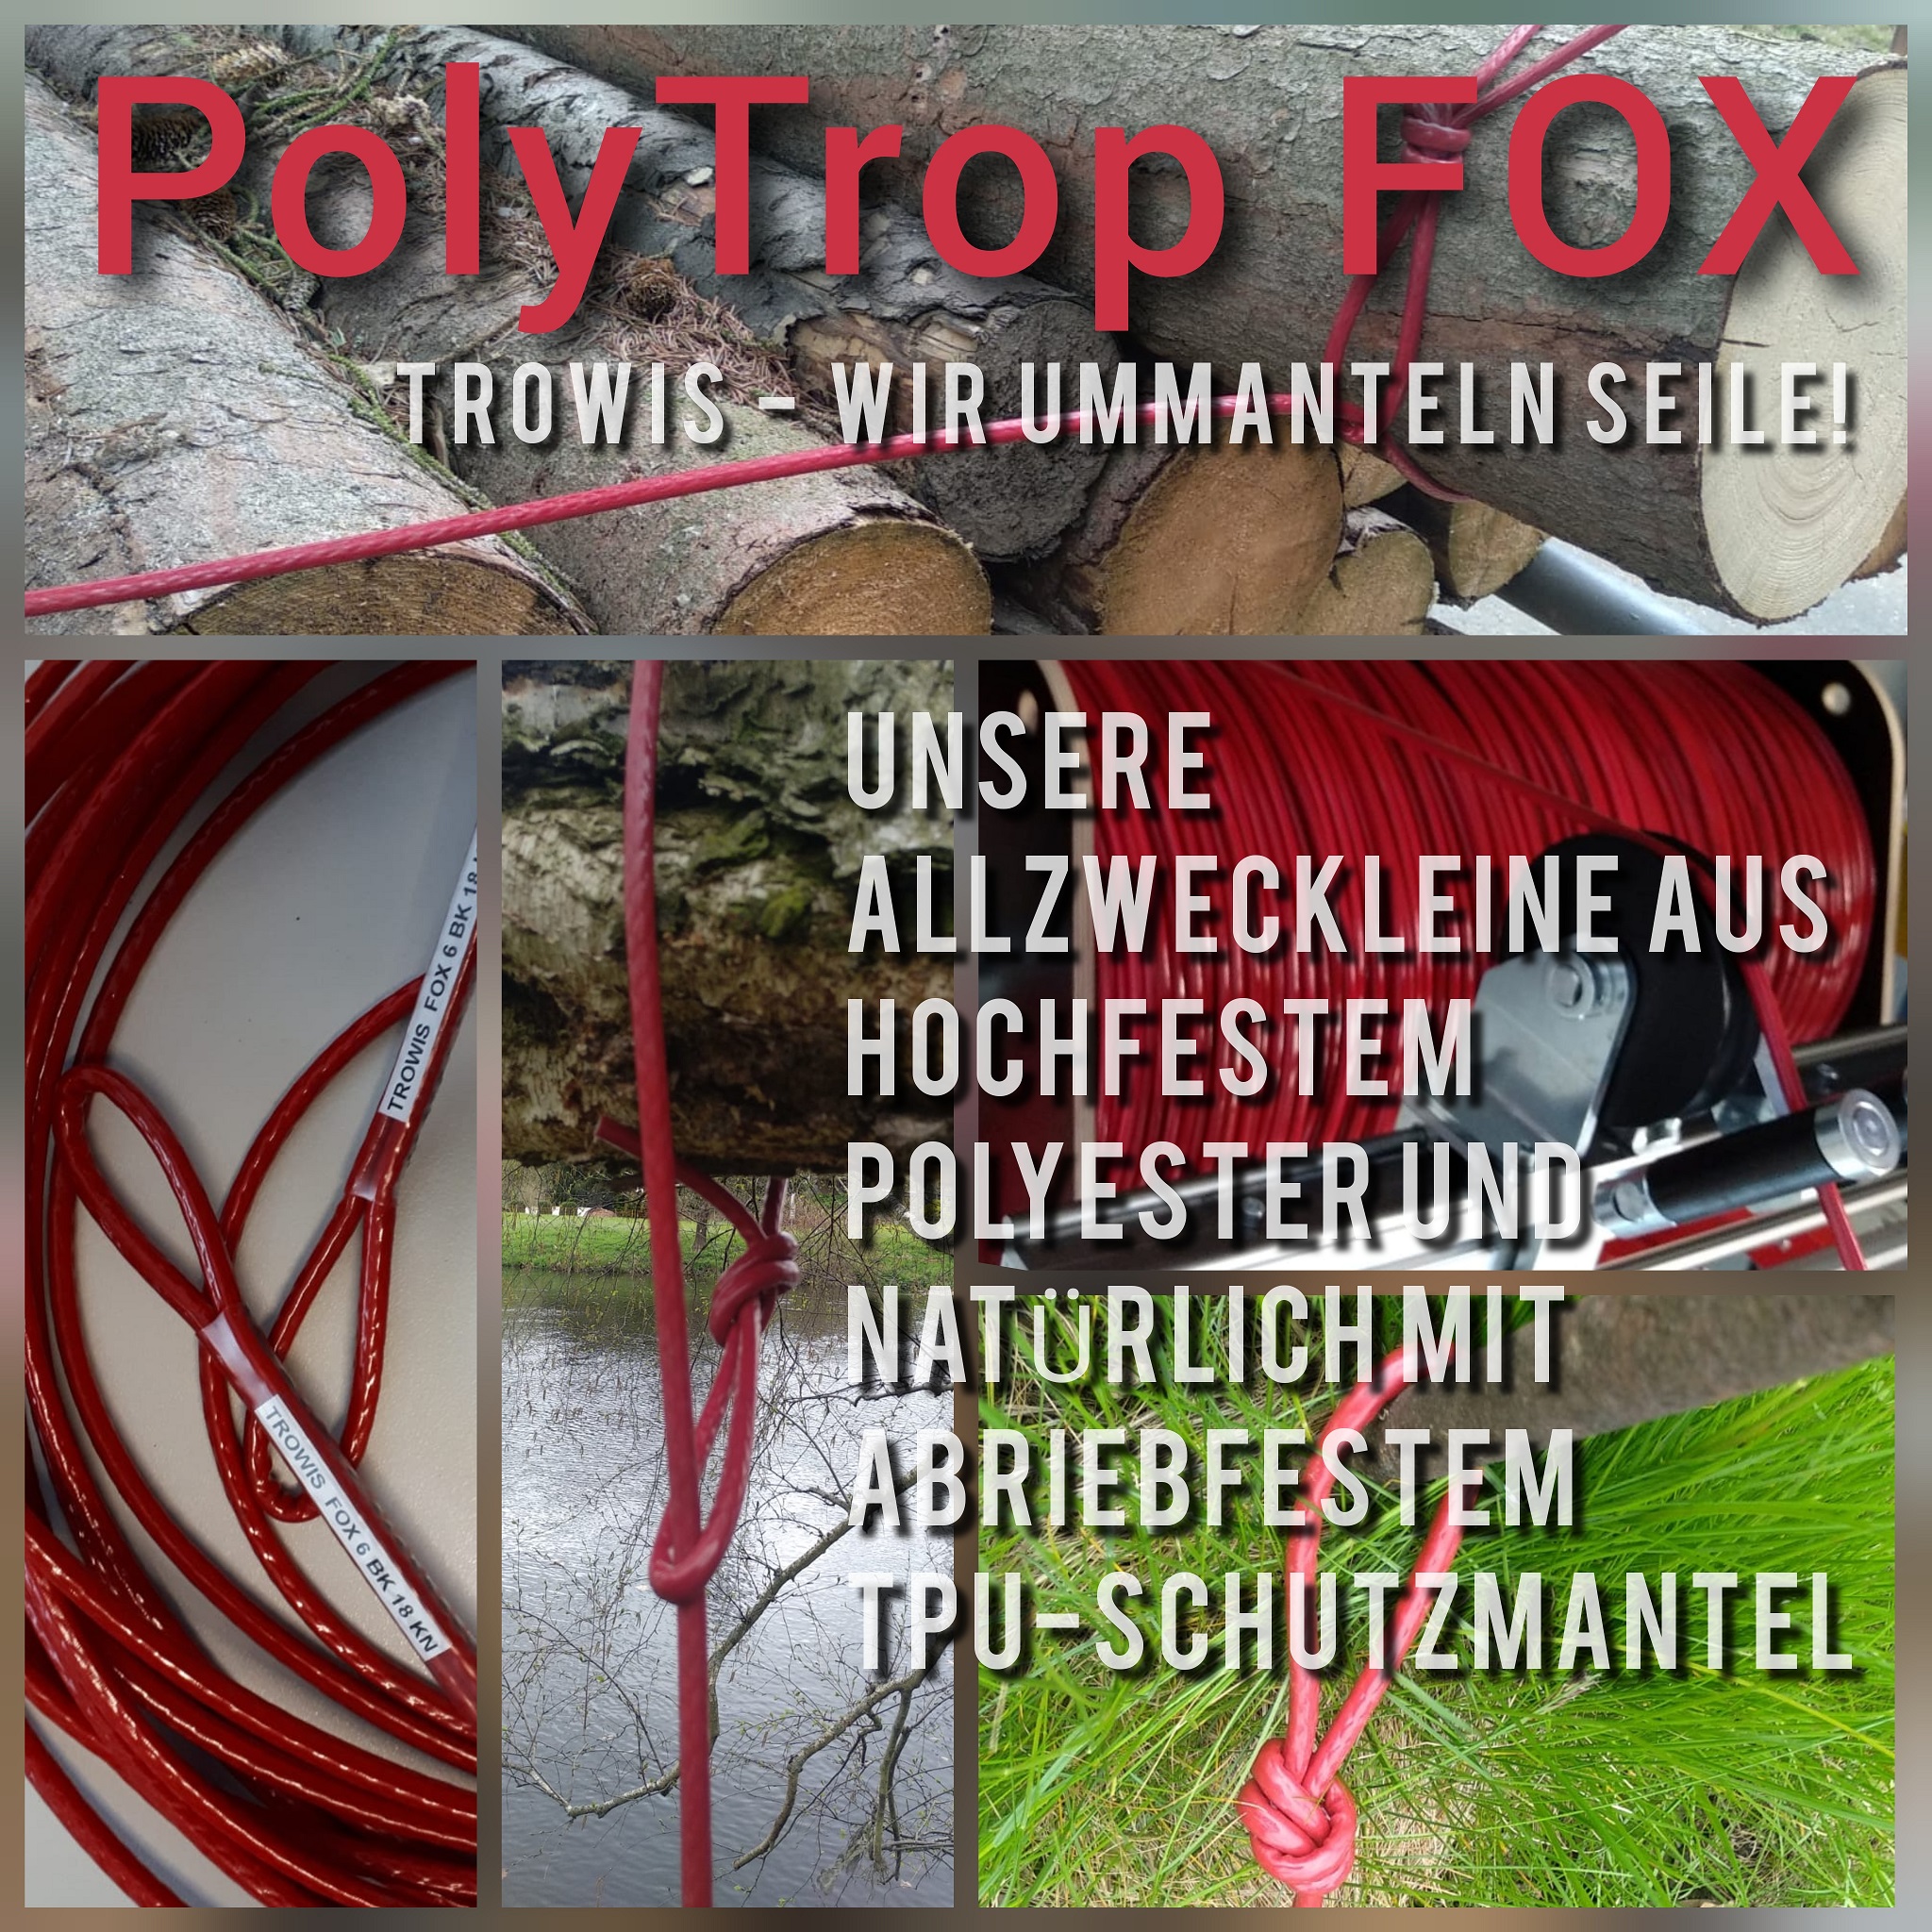 Our PolyTrop FOX rope